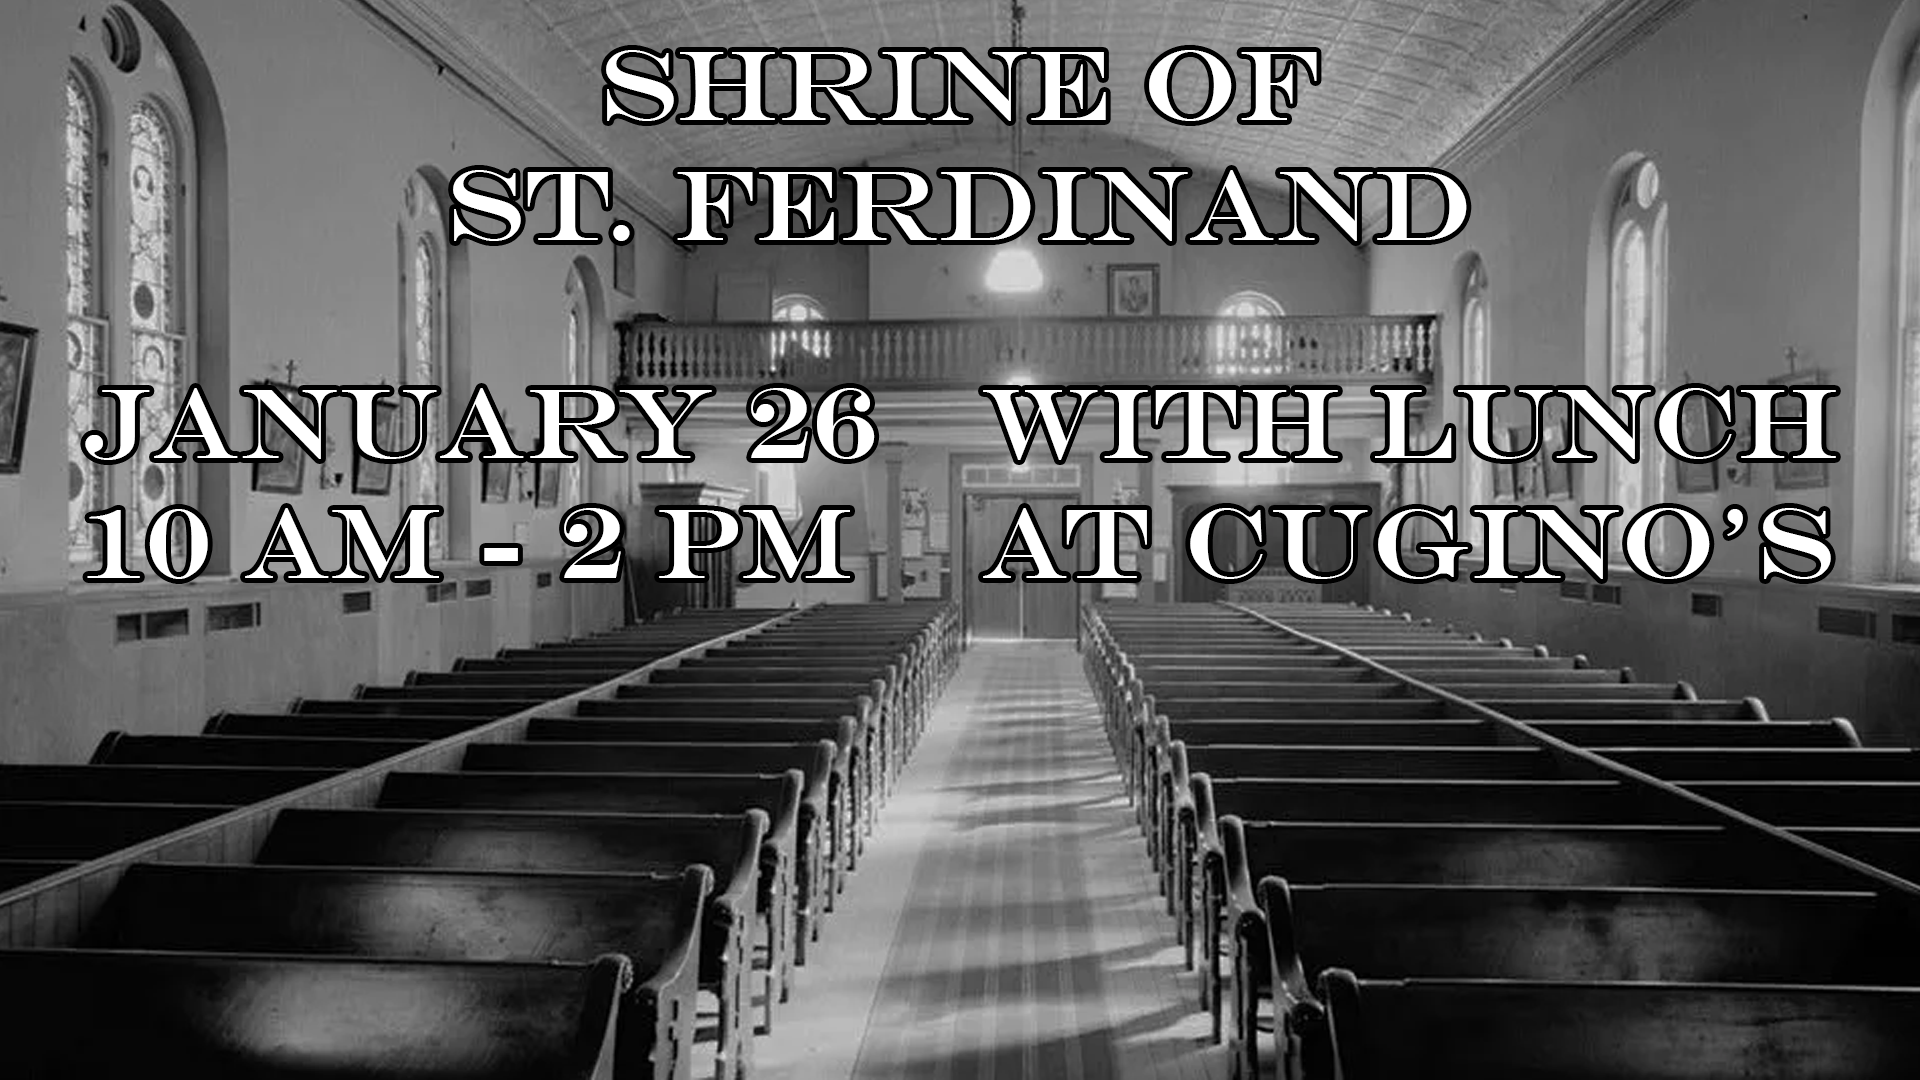 Fee Fee Baptist Church will be visiting the shrine of St. Ferdinand on January 26